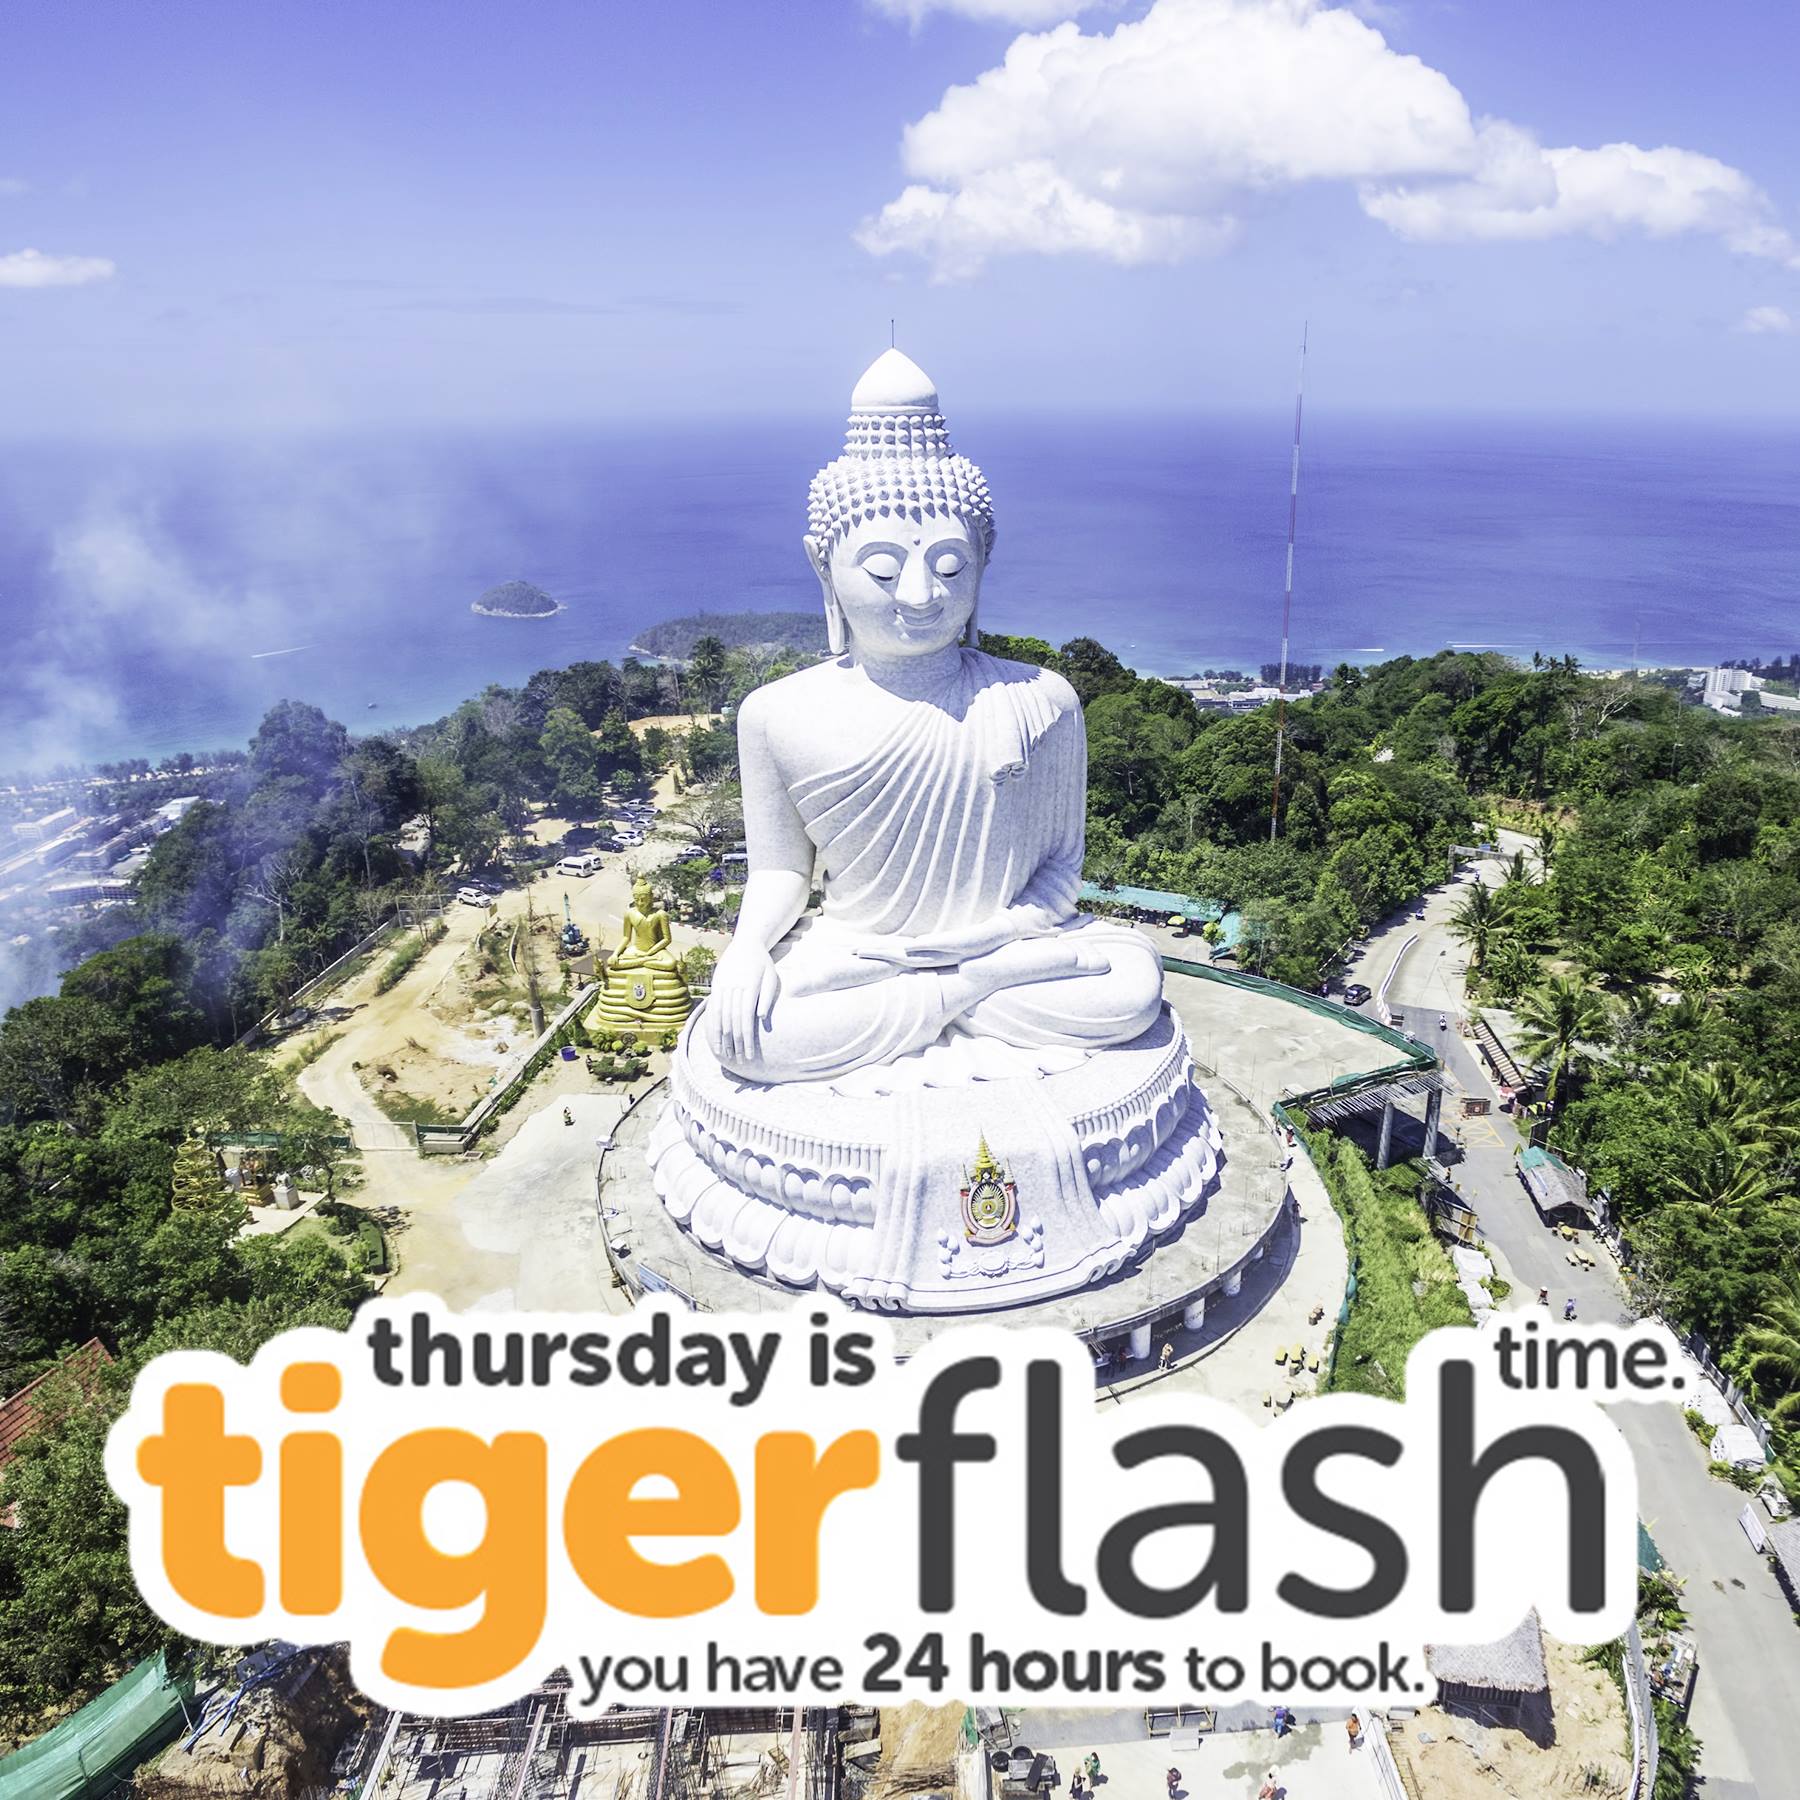 Tigerair Singapore Thursday Tiger Flash 24 Hours Promotion 4 Aug 2016